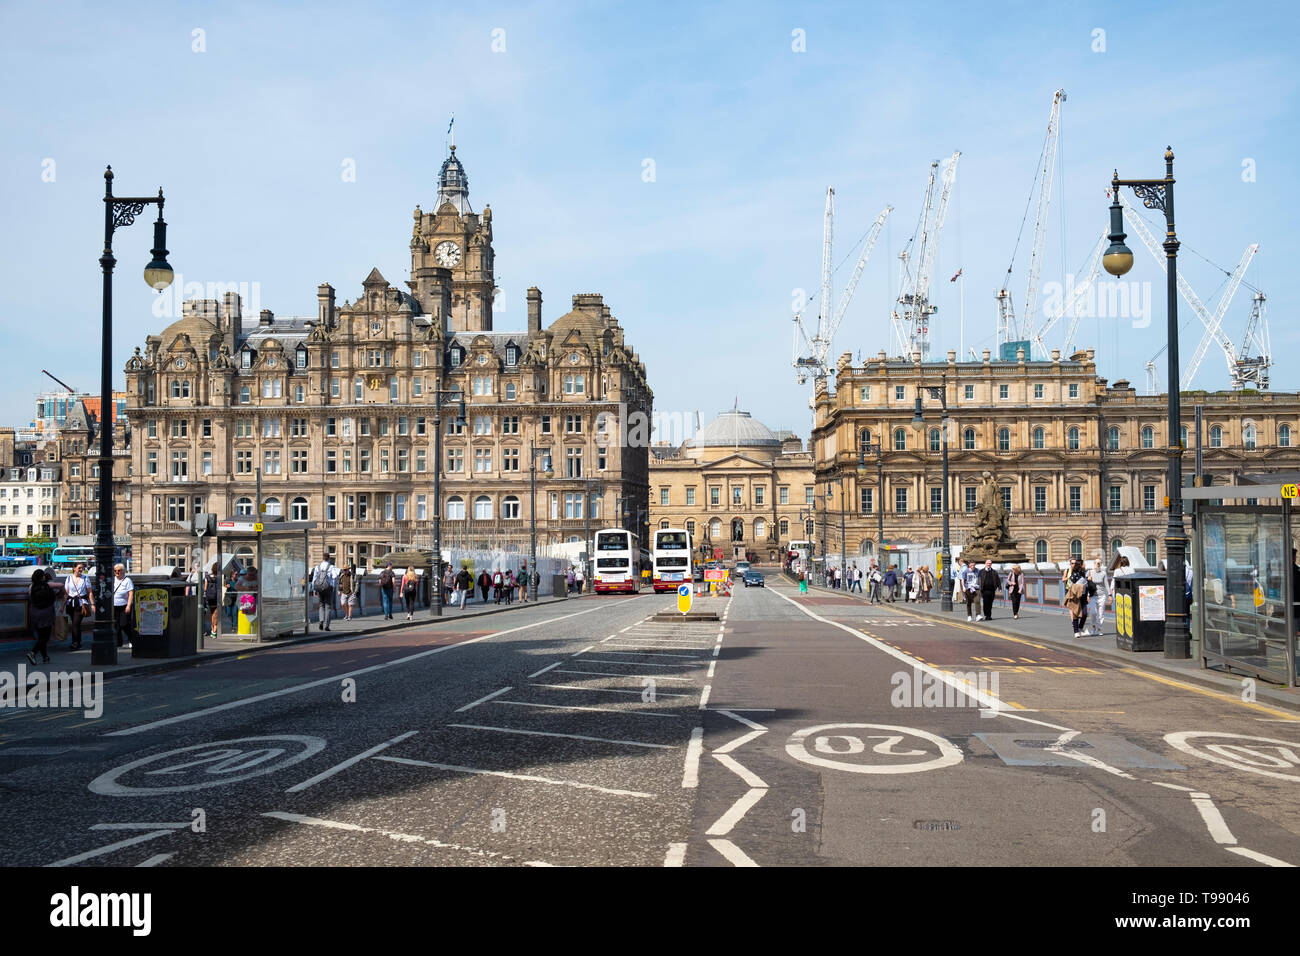 View of road crossing North Bridge with Balmoral hotel on left in Edinburgh, Scotland, UK Stock Photo